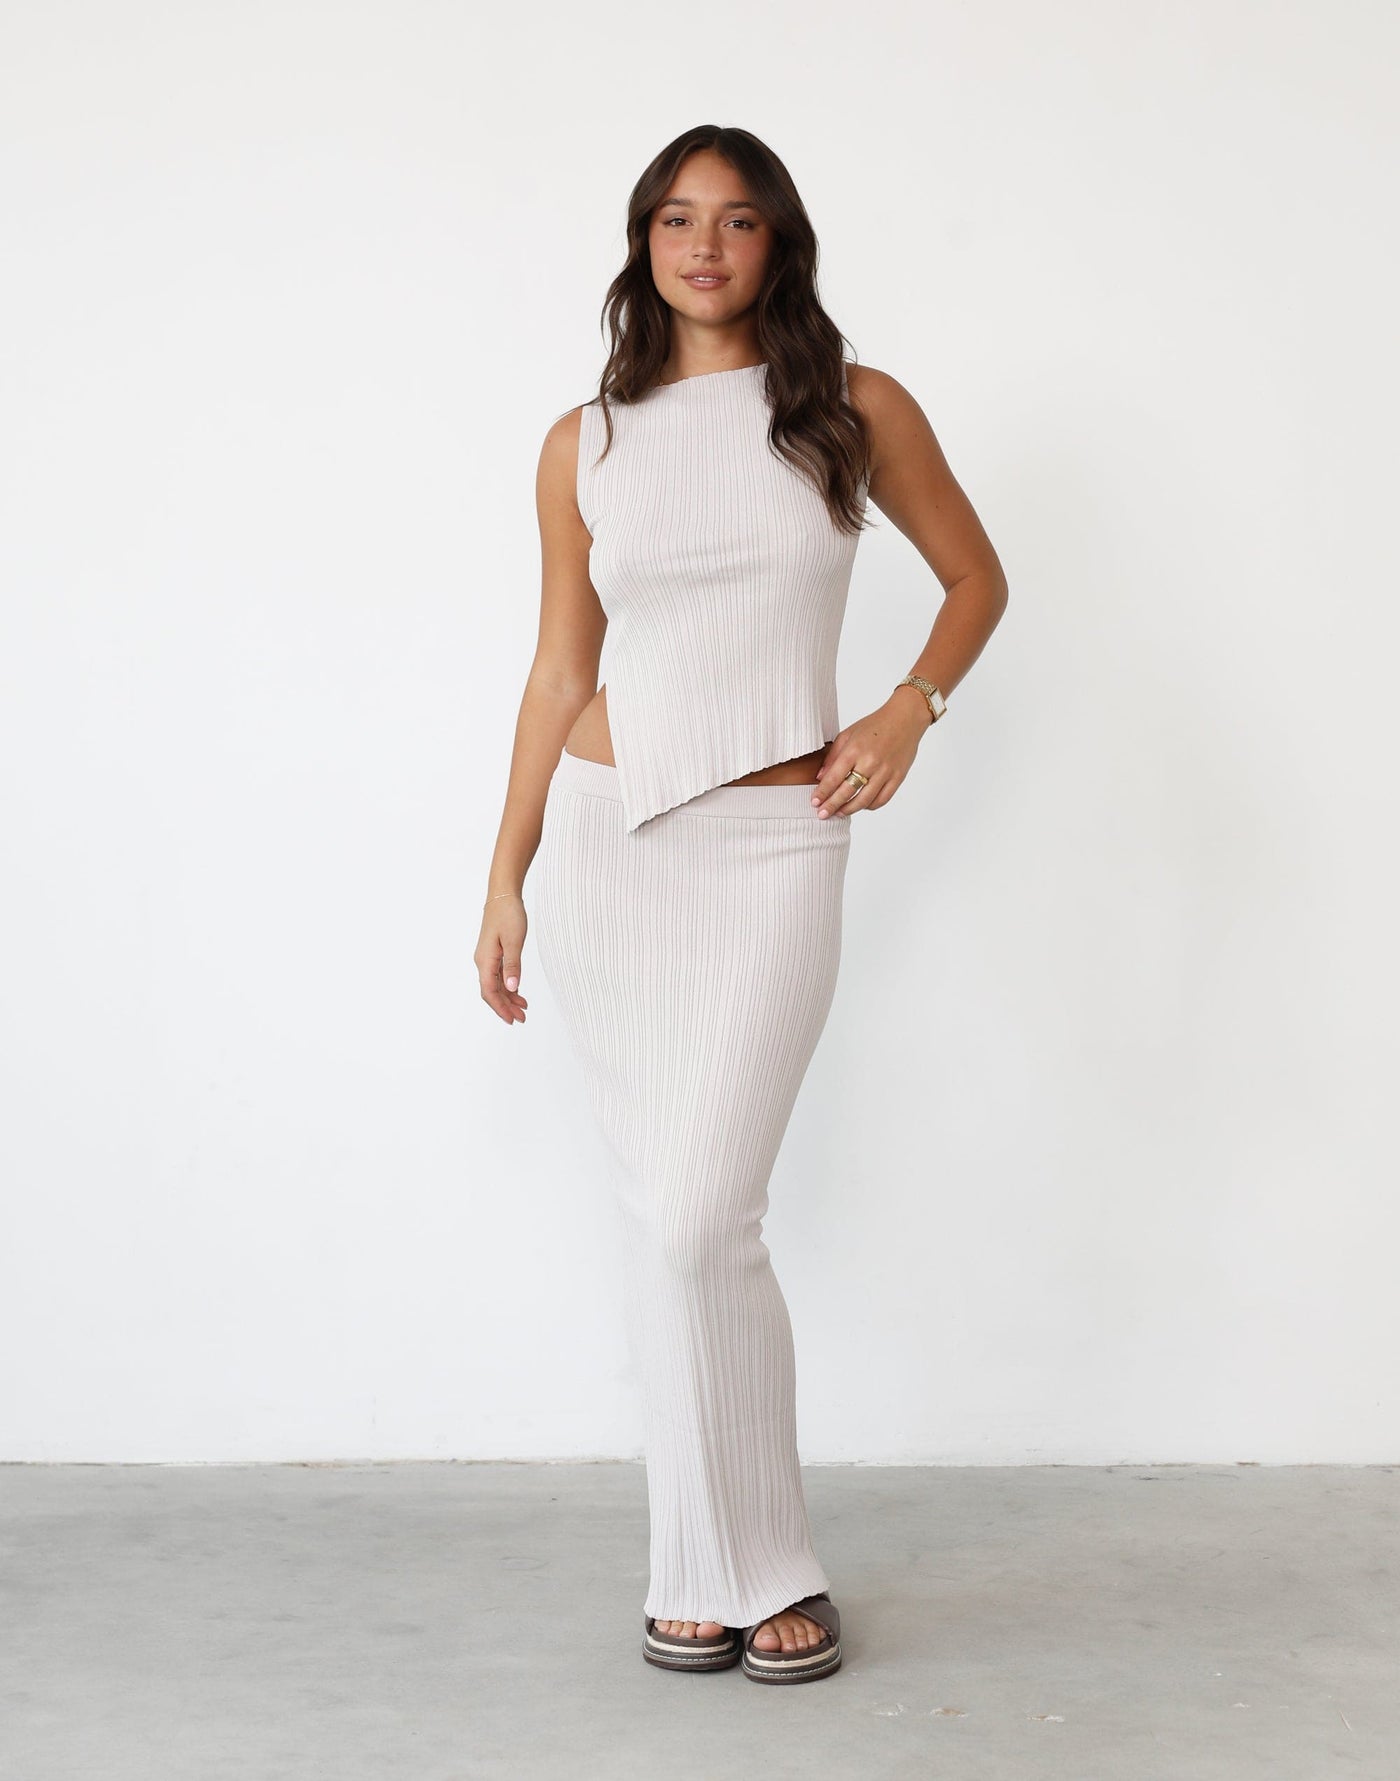 Kienna Top (Cloud) | Charcoal Exclusive - Asymmetrical Top - Women's Top - Charcoal Clothing